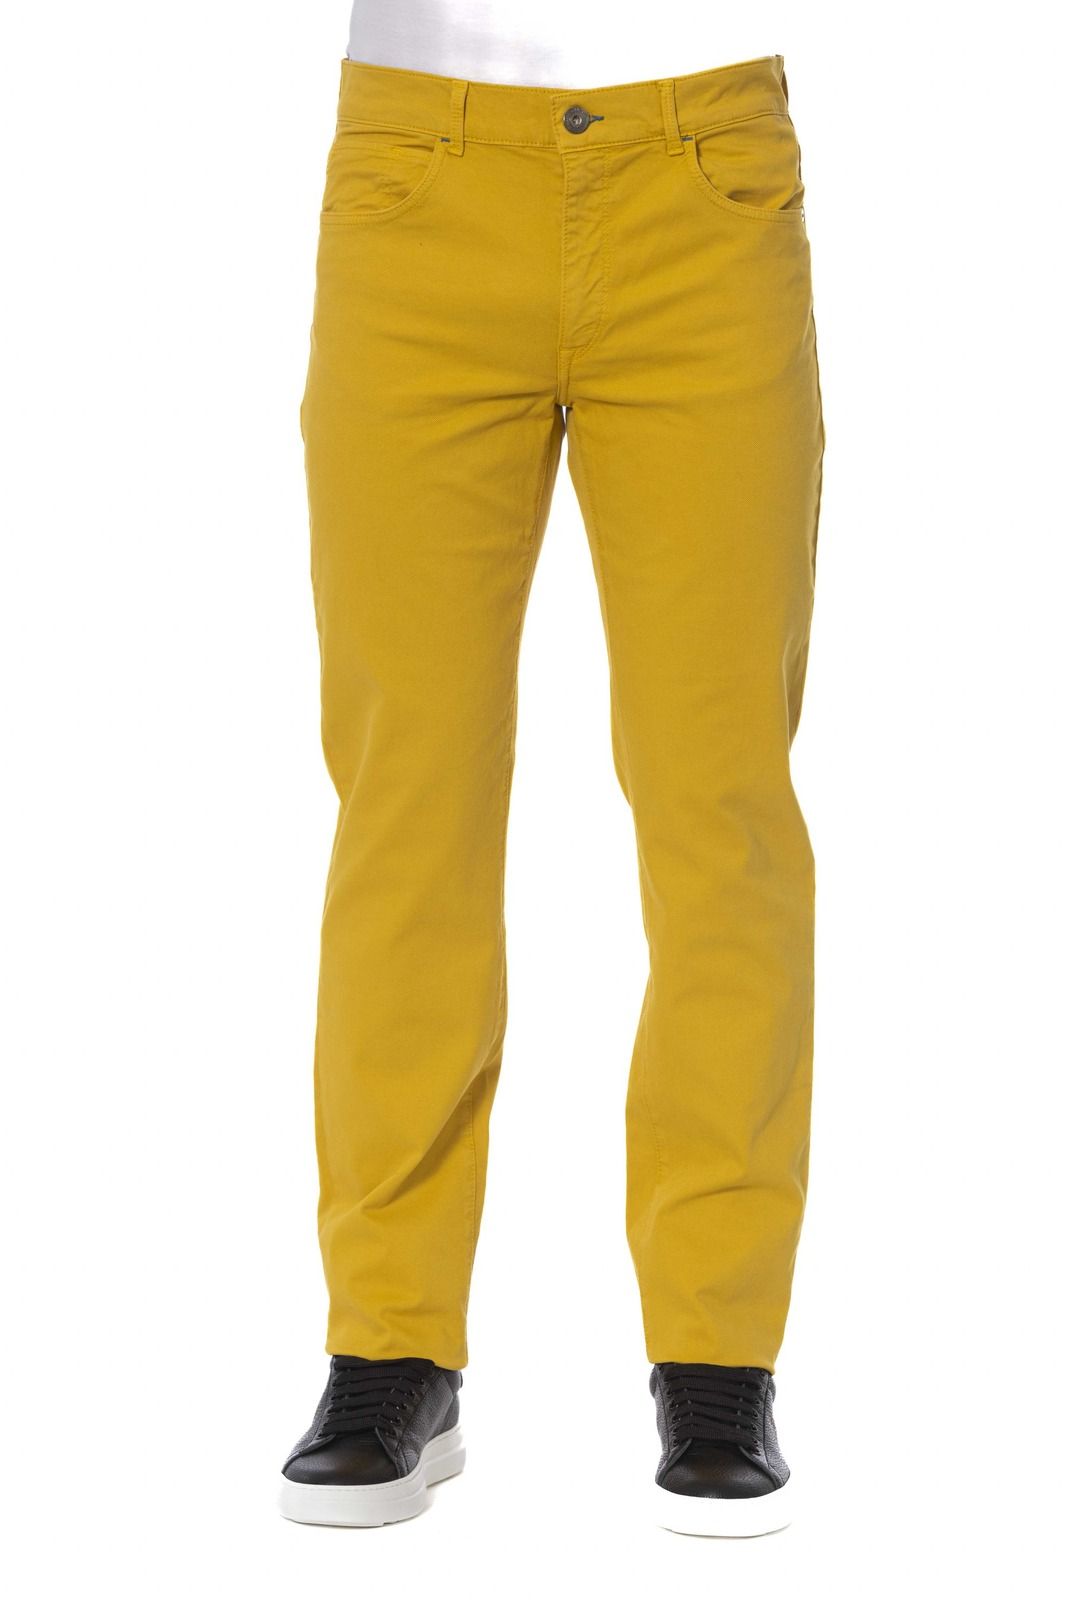 Trussardi Jeans 52J00004 1T002360 H 002 Barva: žlutá, Velikost: 38